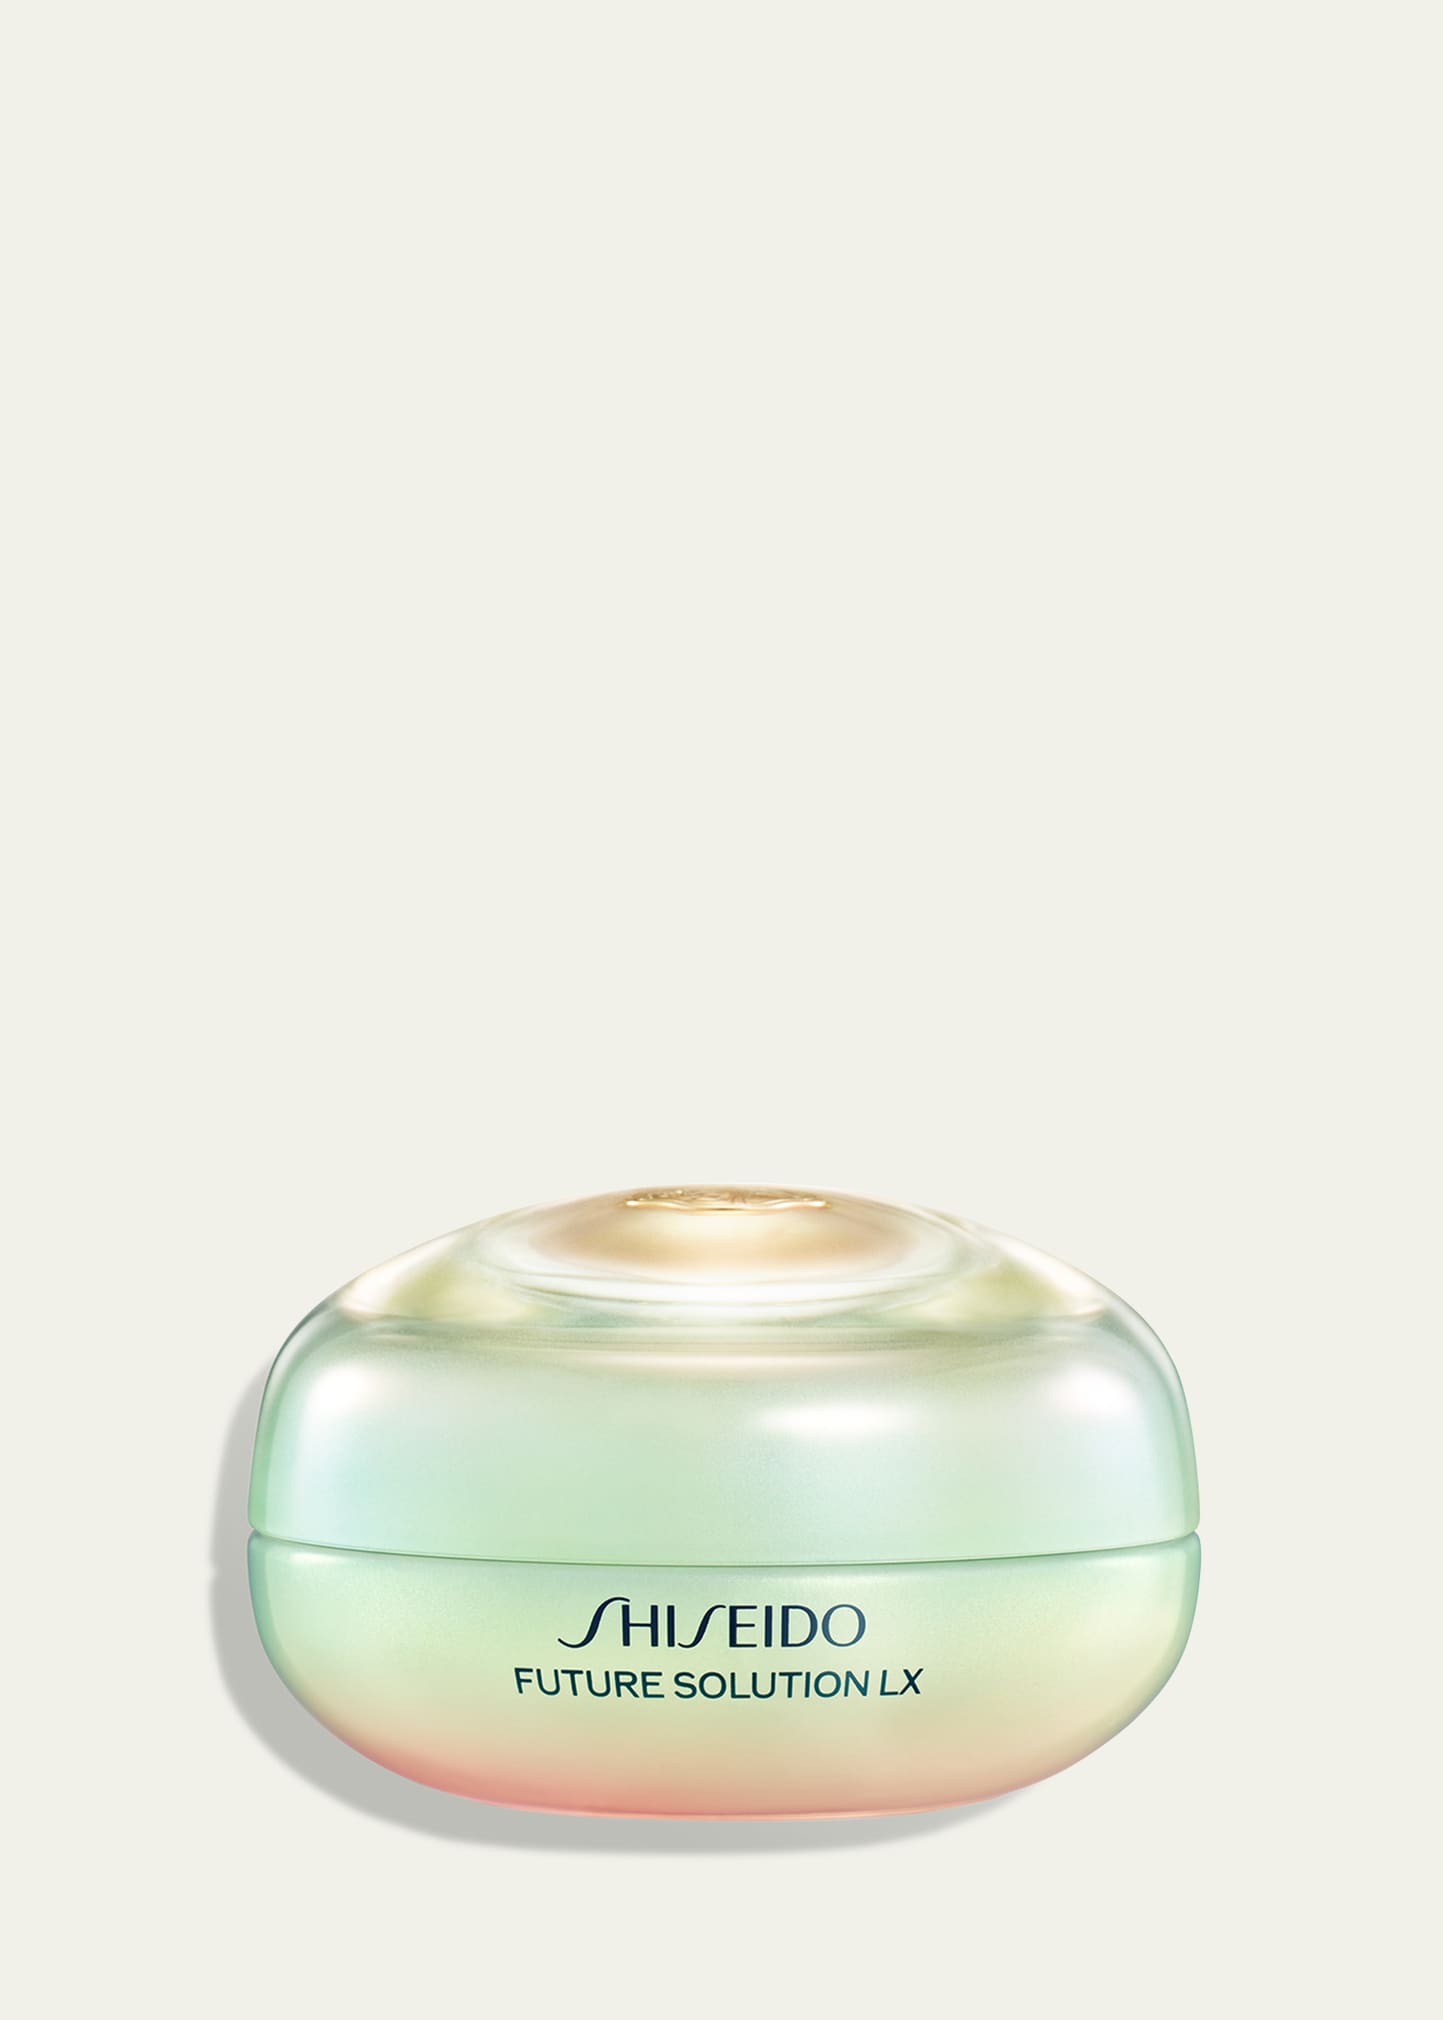 Shiseido Future Solution Lx Legendary Enmei Ultimate Brilliance Eye Cream, 0.54 Oz.